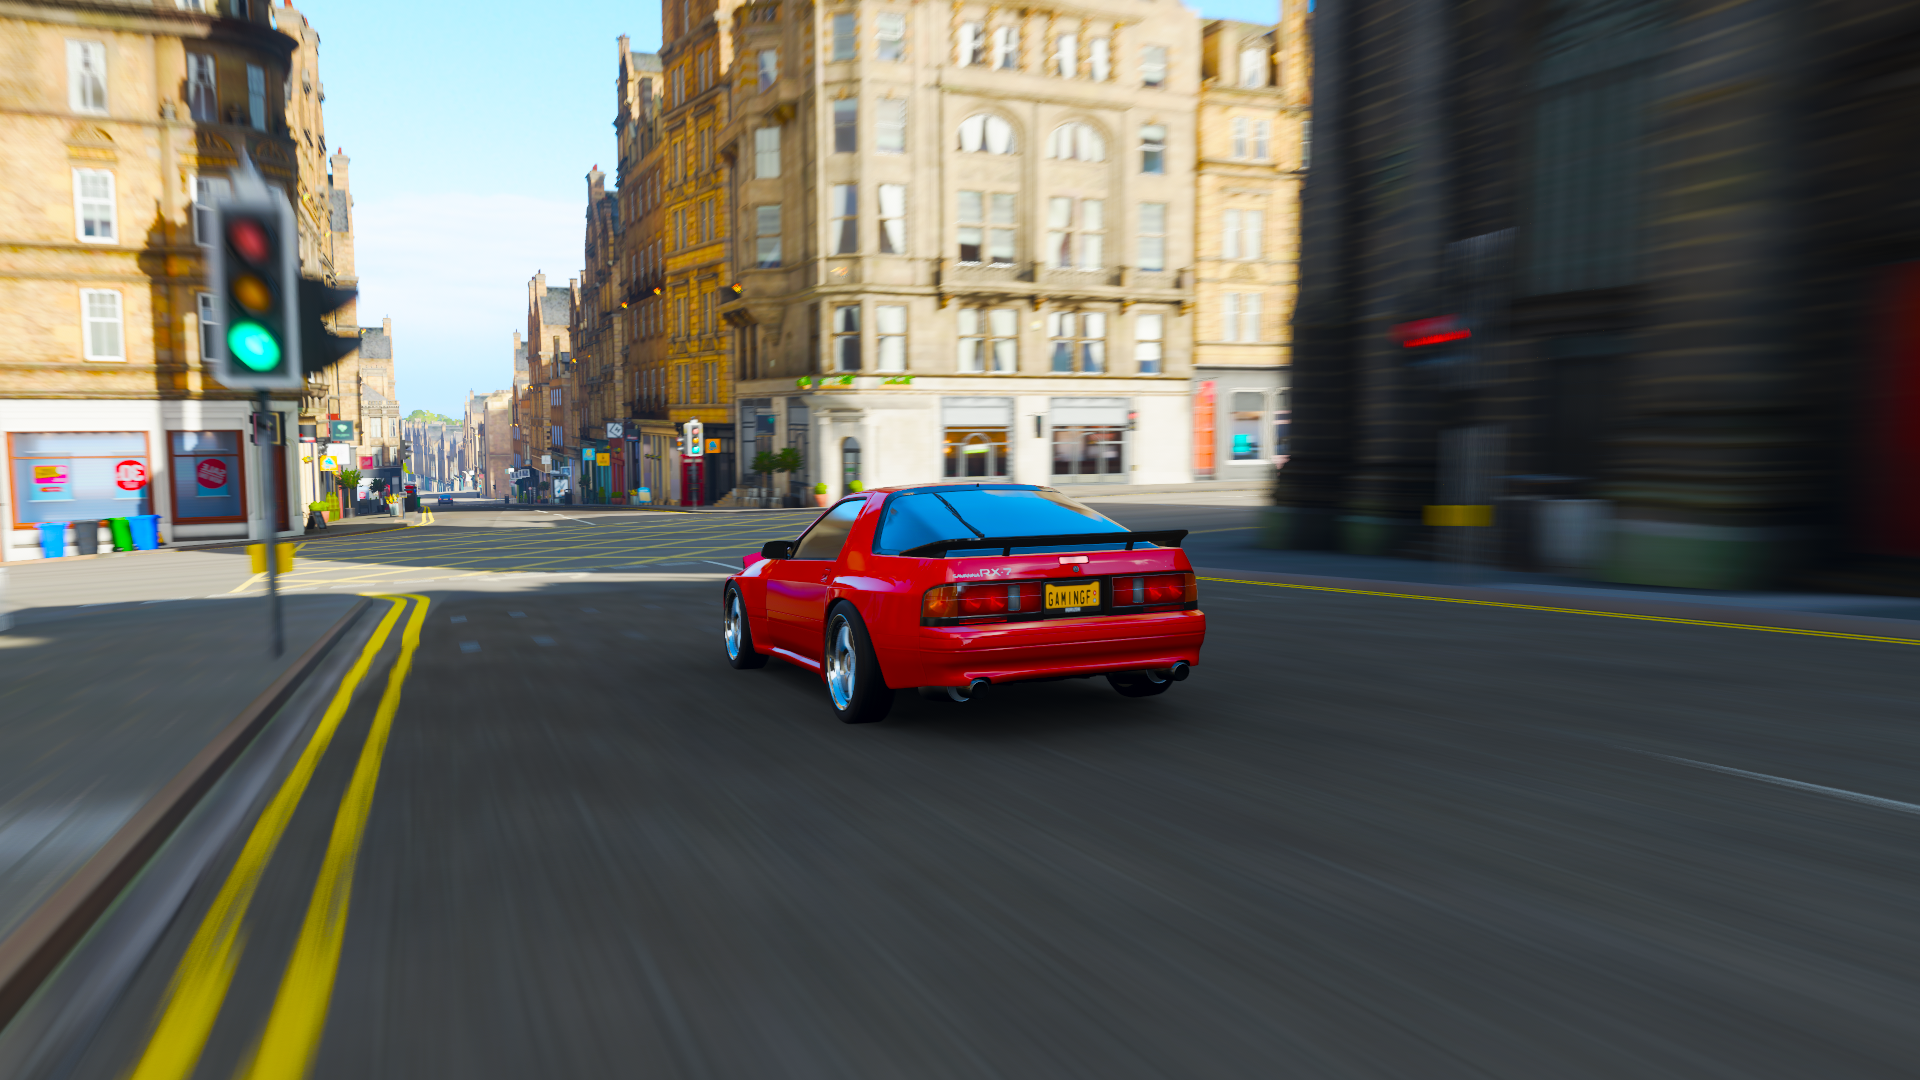 General 1920x1080 Forza Forza Horizon 4 Mazda Mazda RX-7 car video games red cars vehicle screen shot pop-up headlights